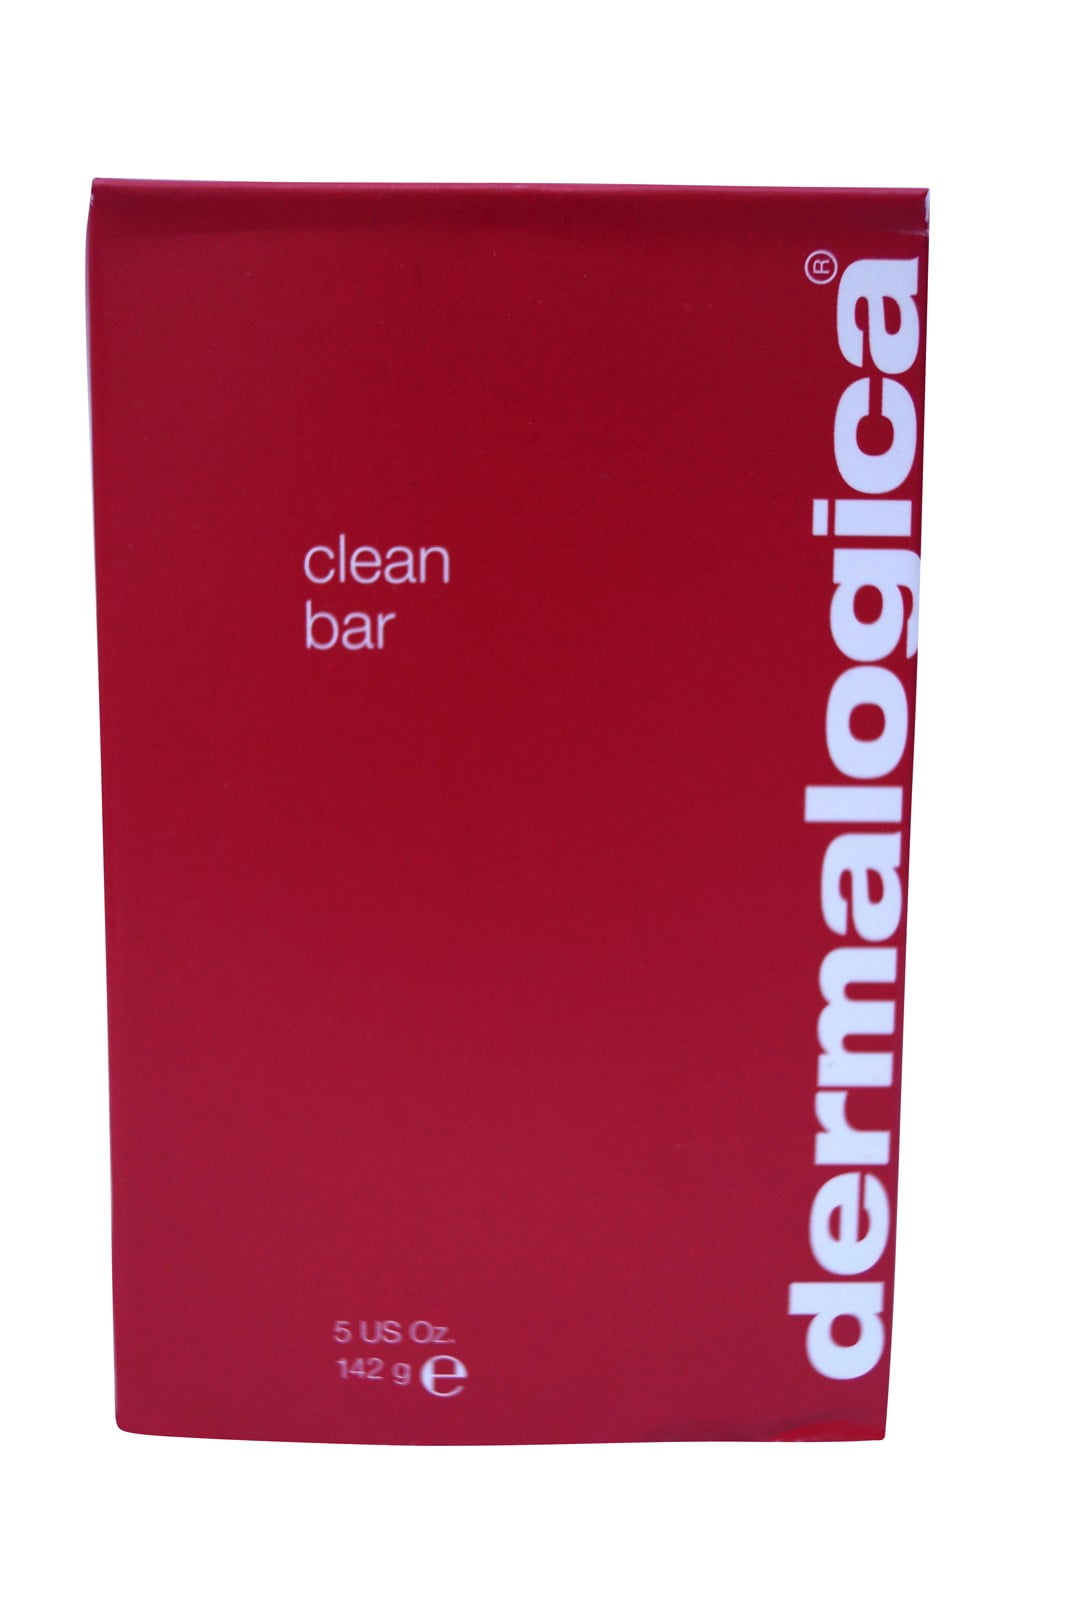 dermalogica clean bar